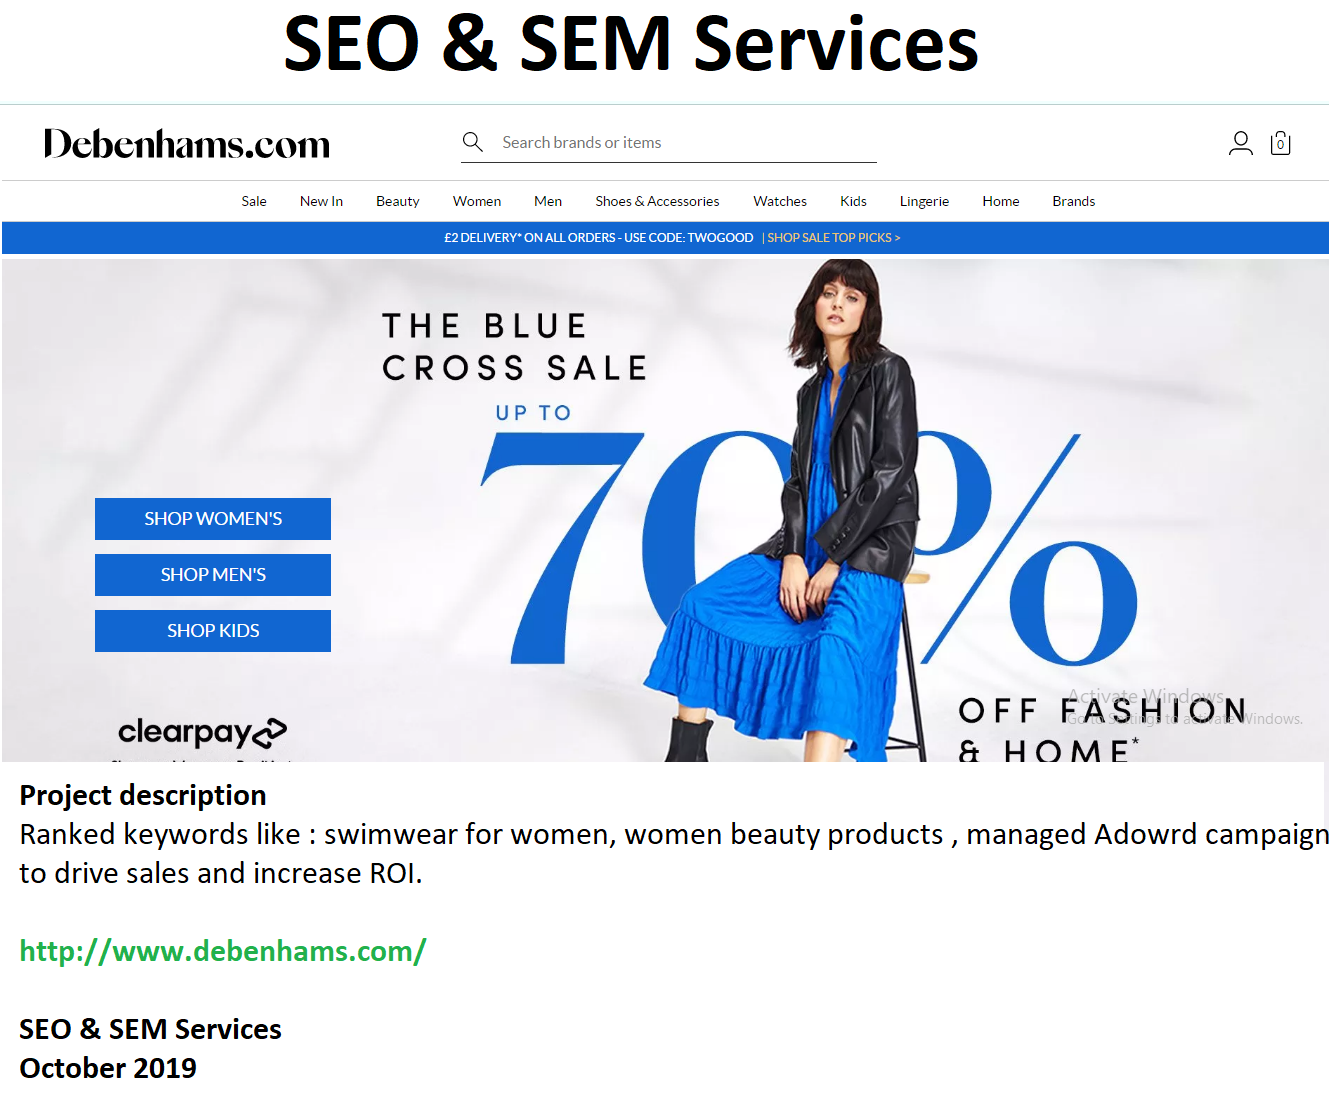 SEO & SEM Services